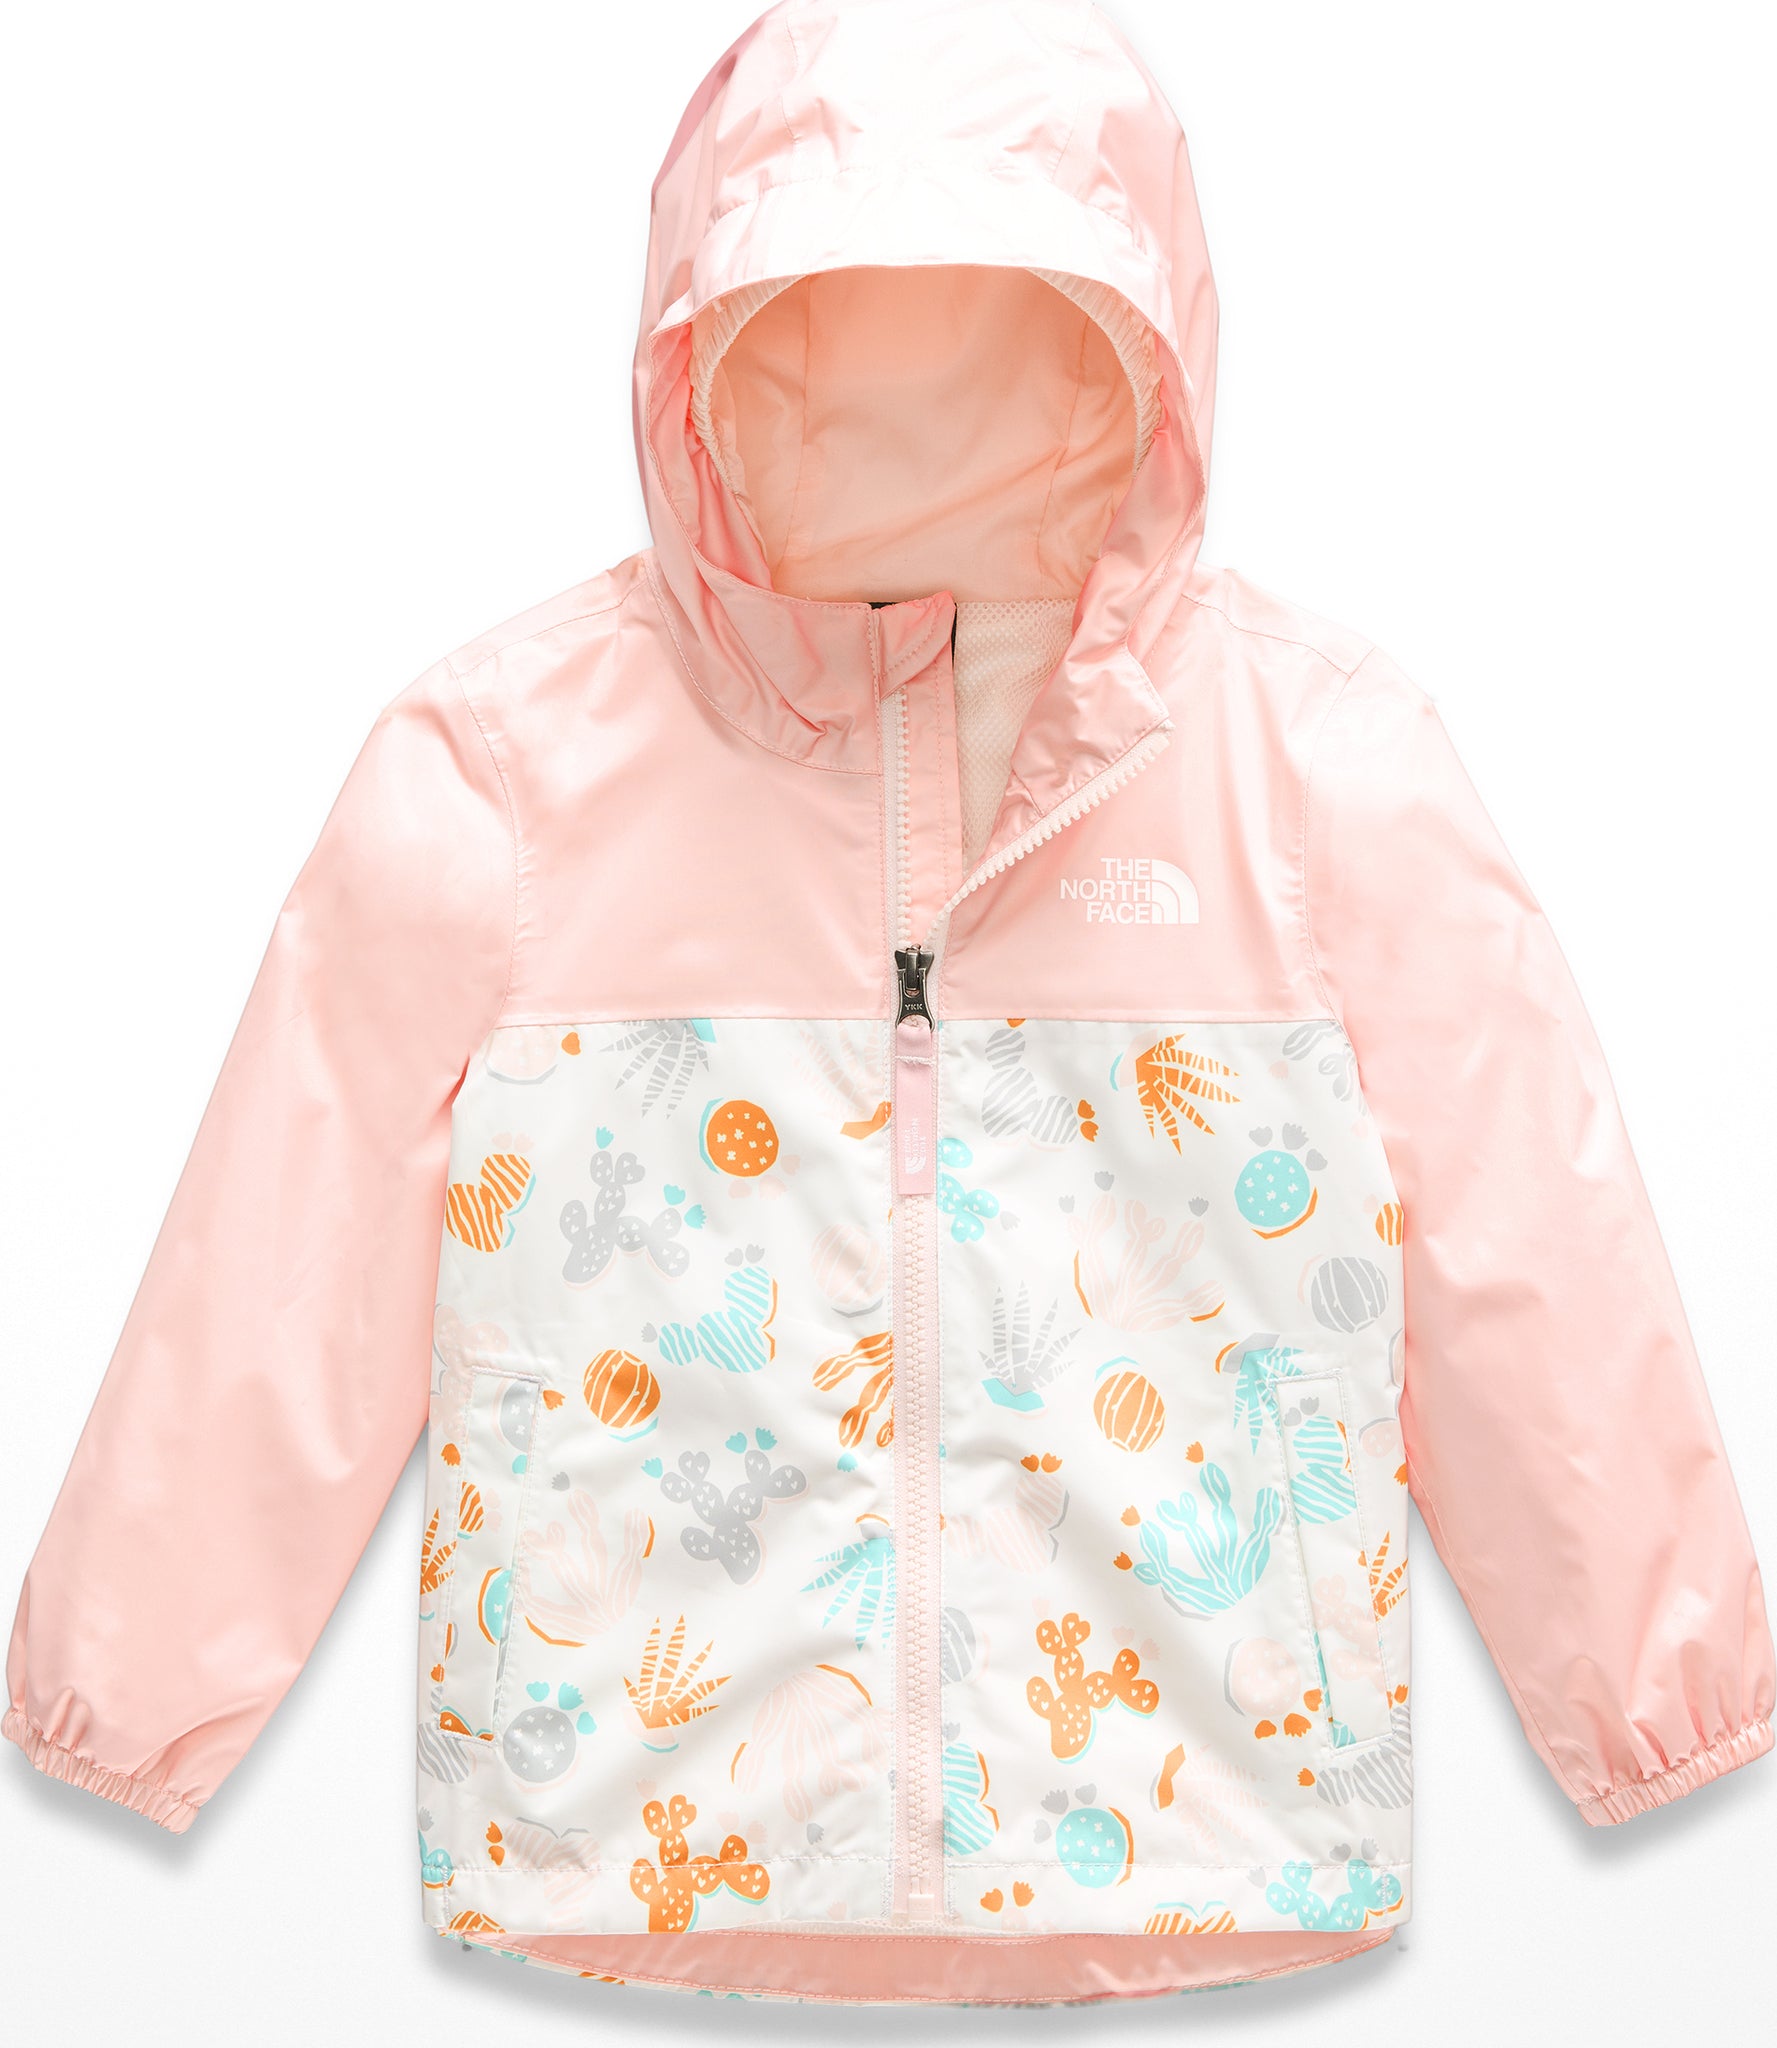 north face toddler zipline rain jacket